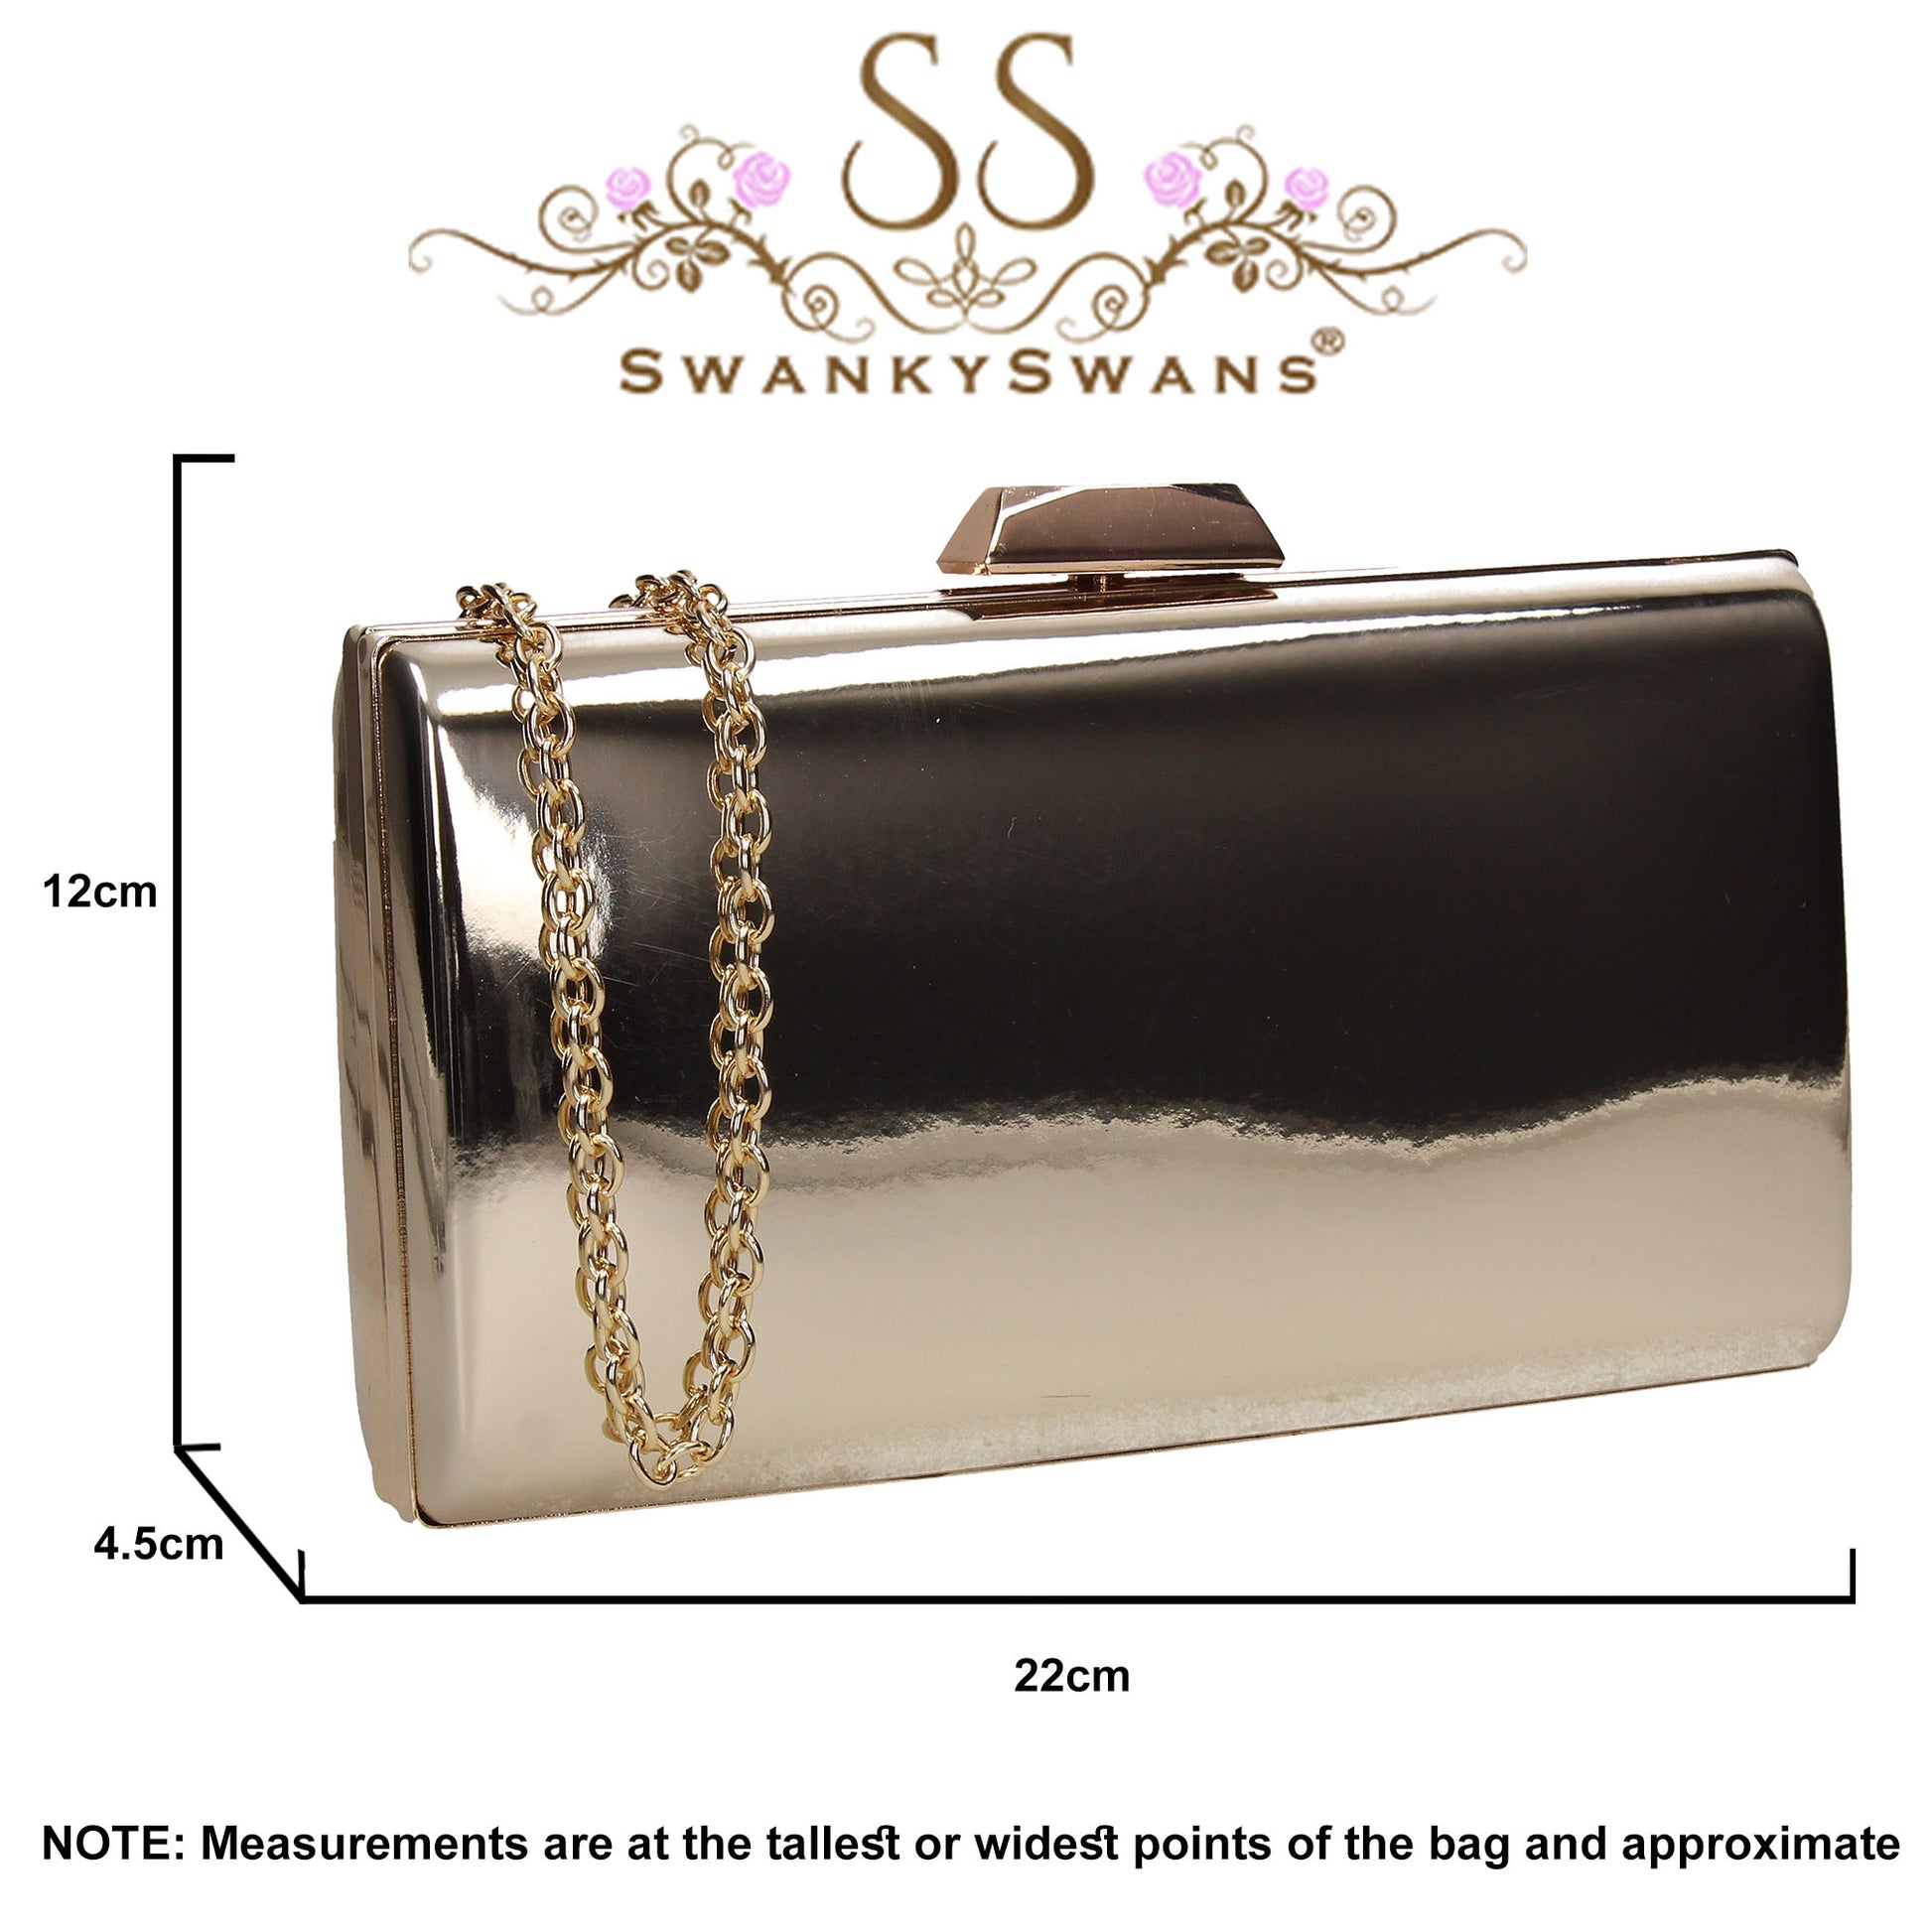 SWANKYSWANS Finley Clutch Bag Gold Cute Cheap Clutch Bag For Weddings School and Work